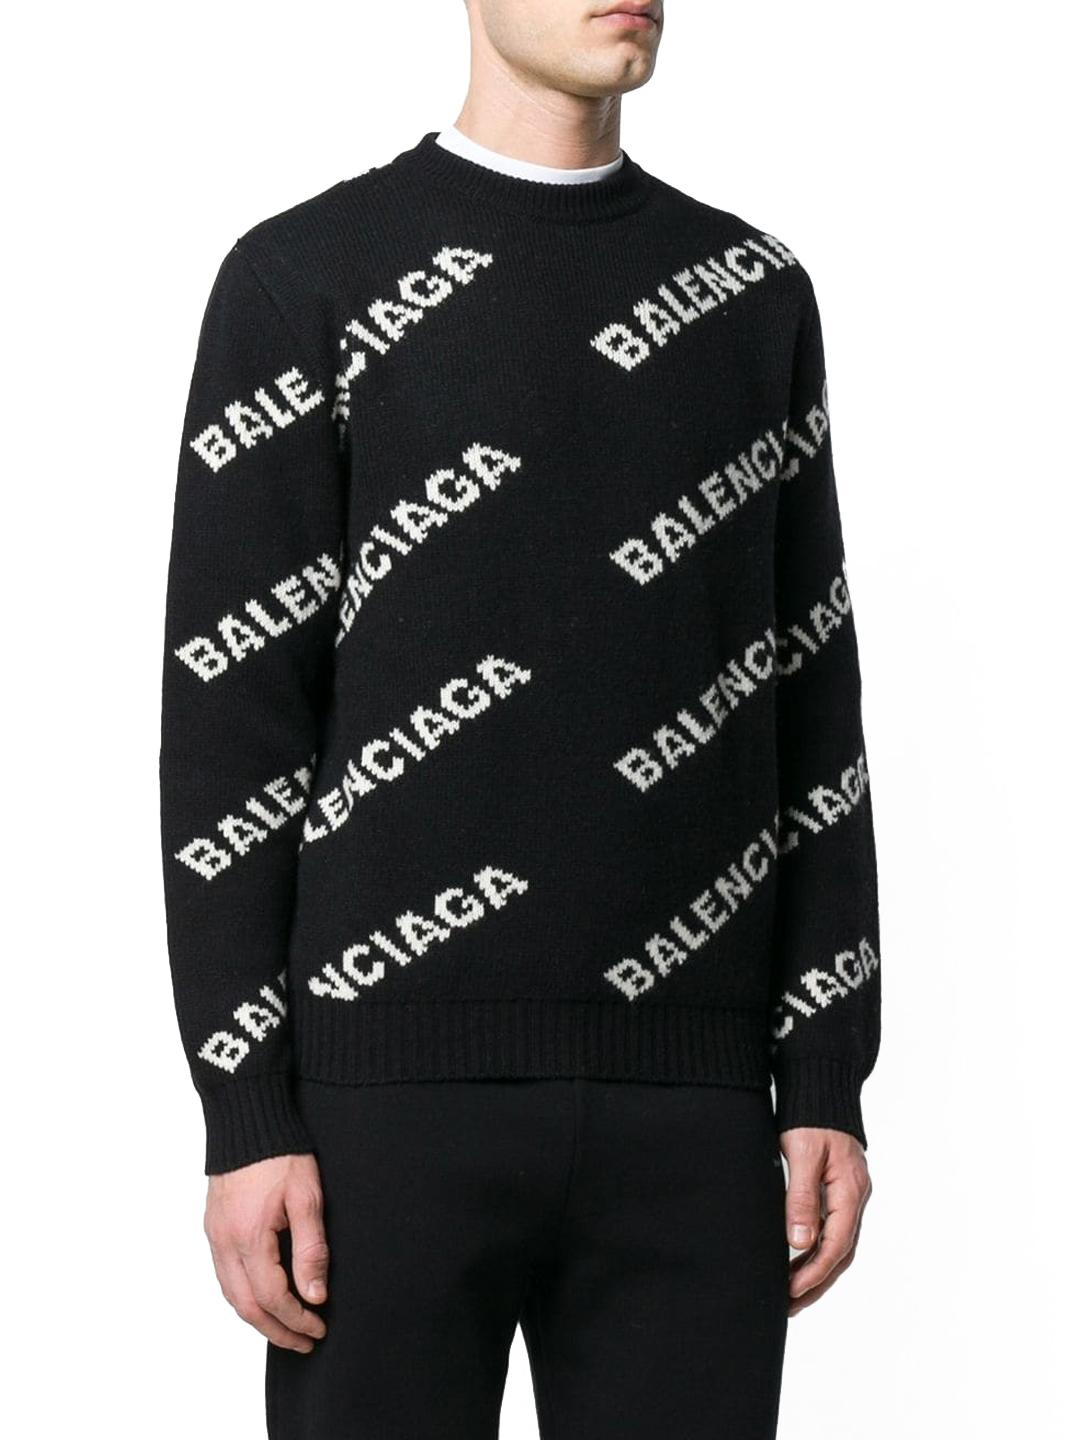 Balenciaga Wool Logo Sweater in Black/White (Black) for Men - Lyst